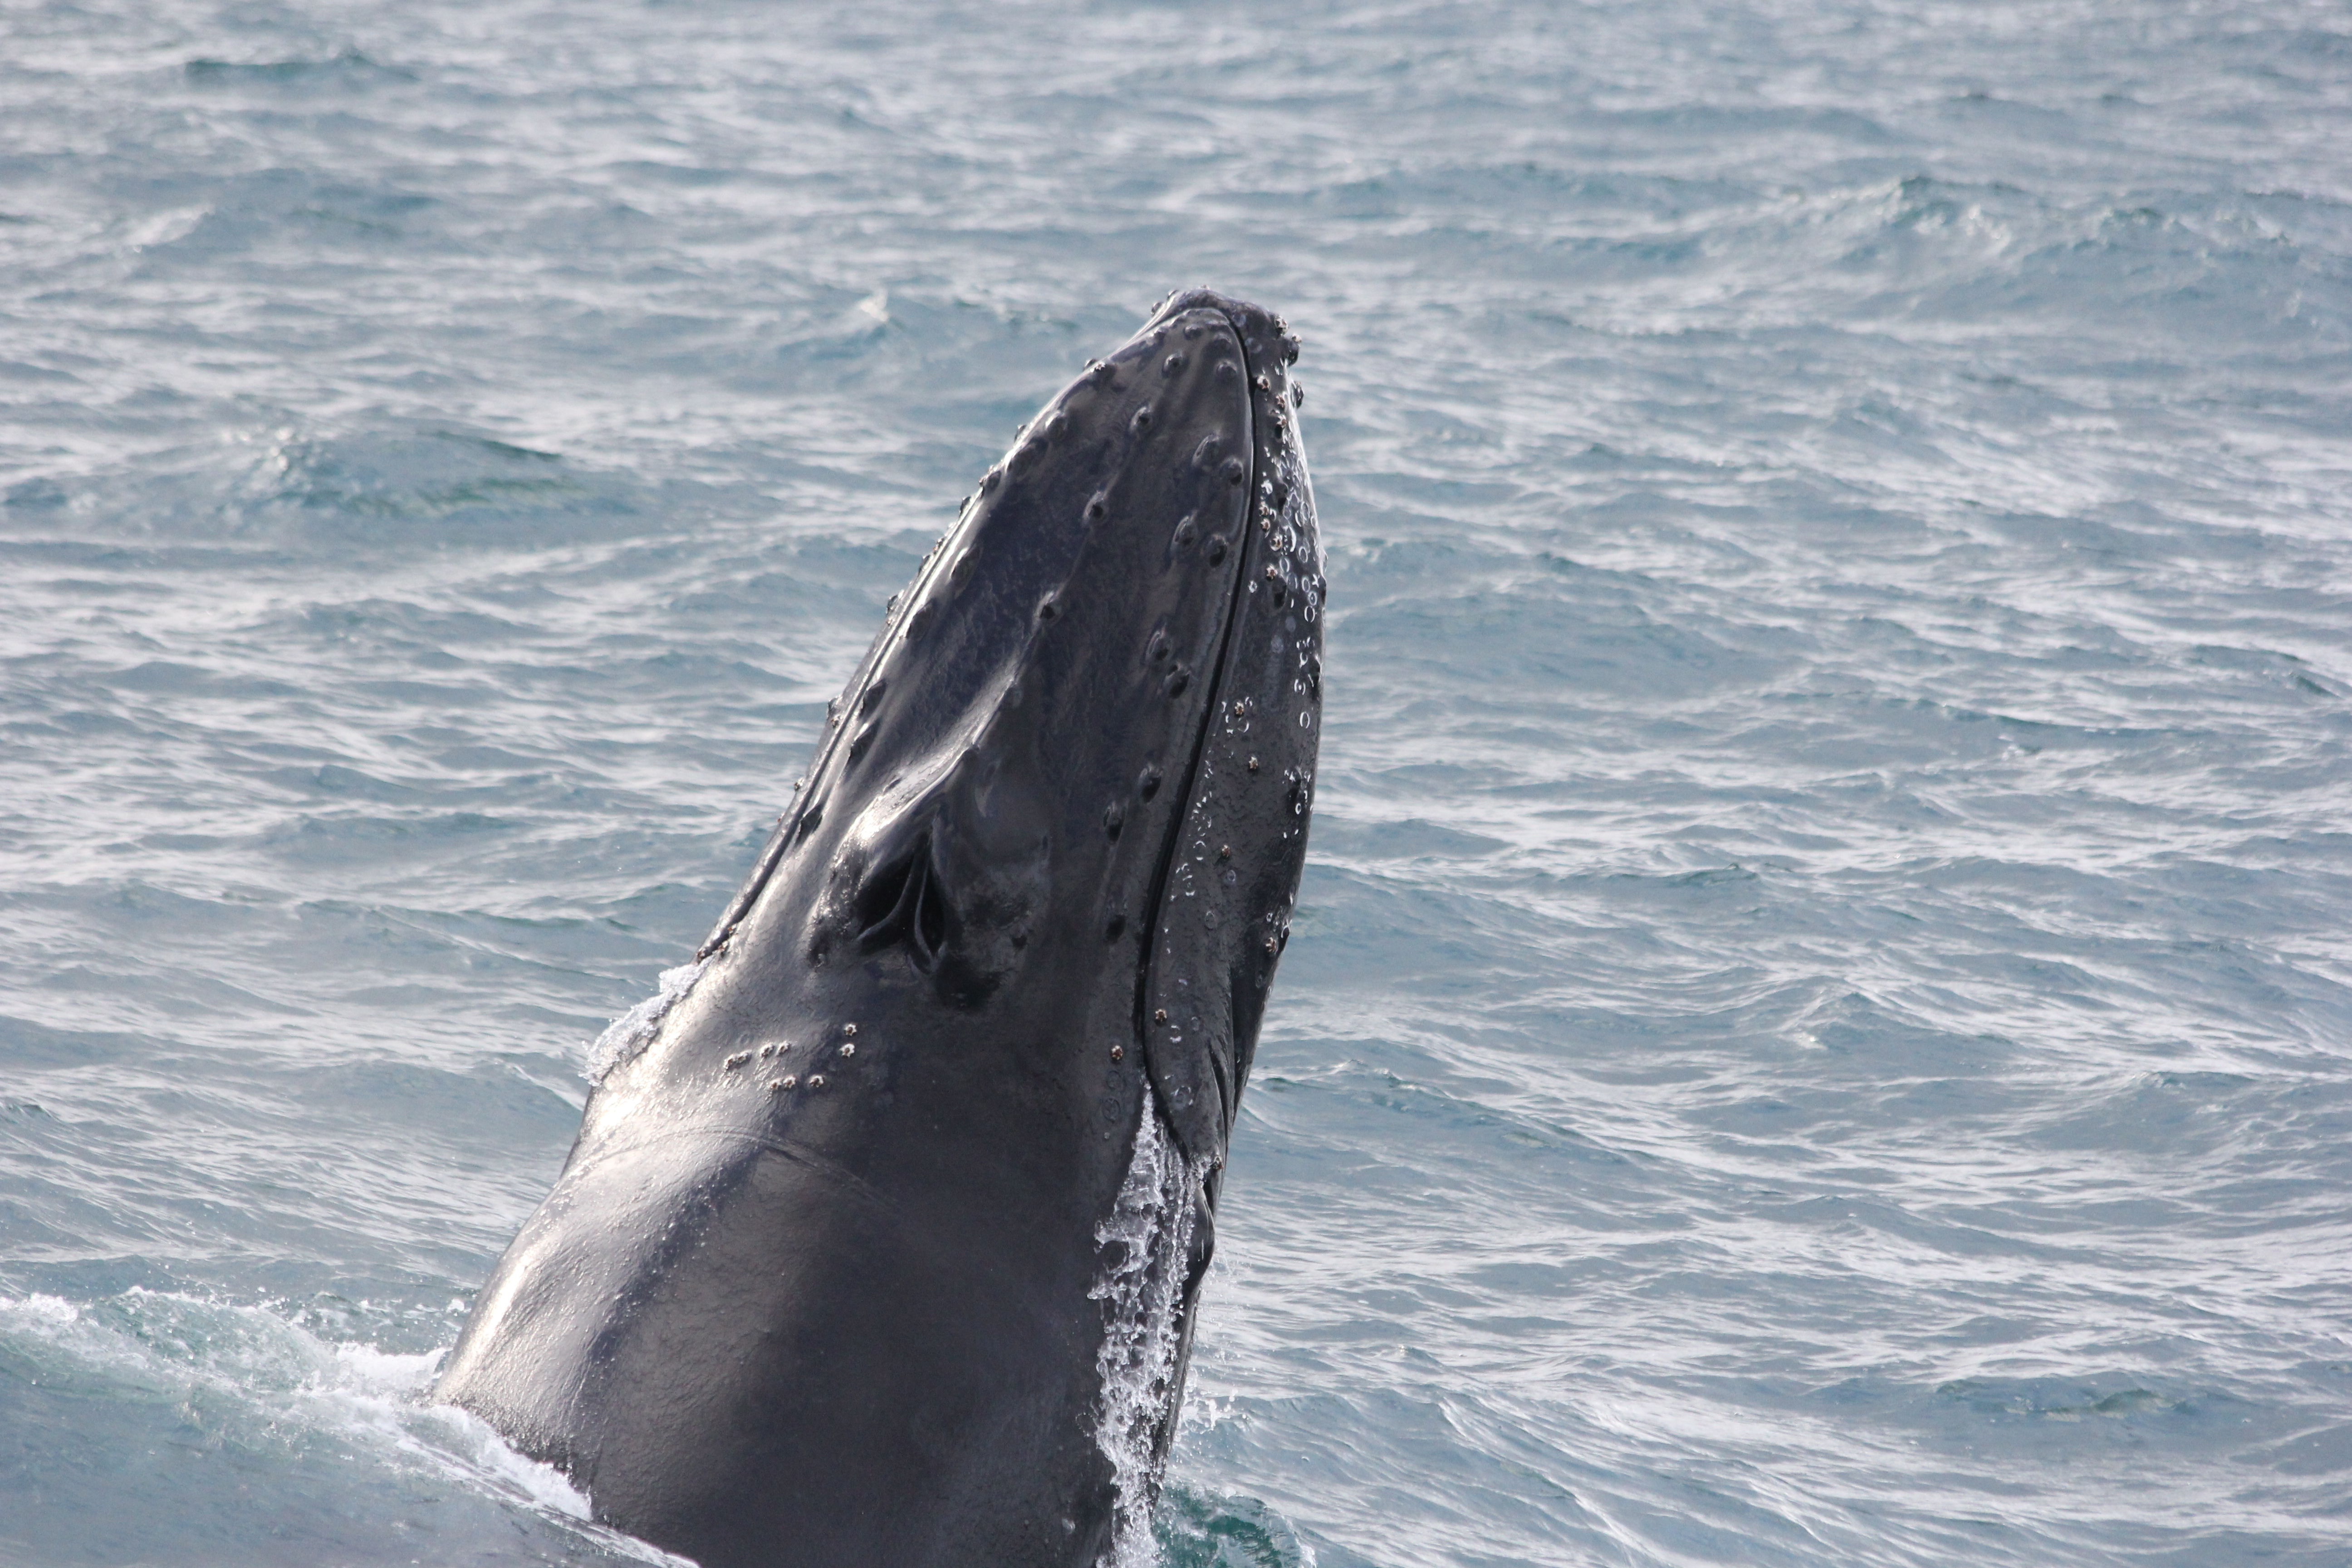 A breaching humpback whale